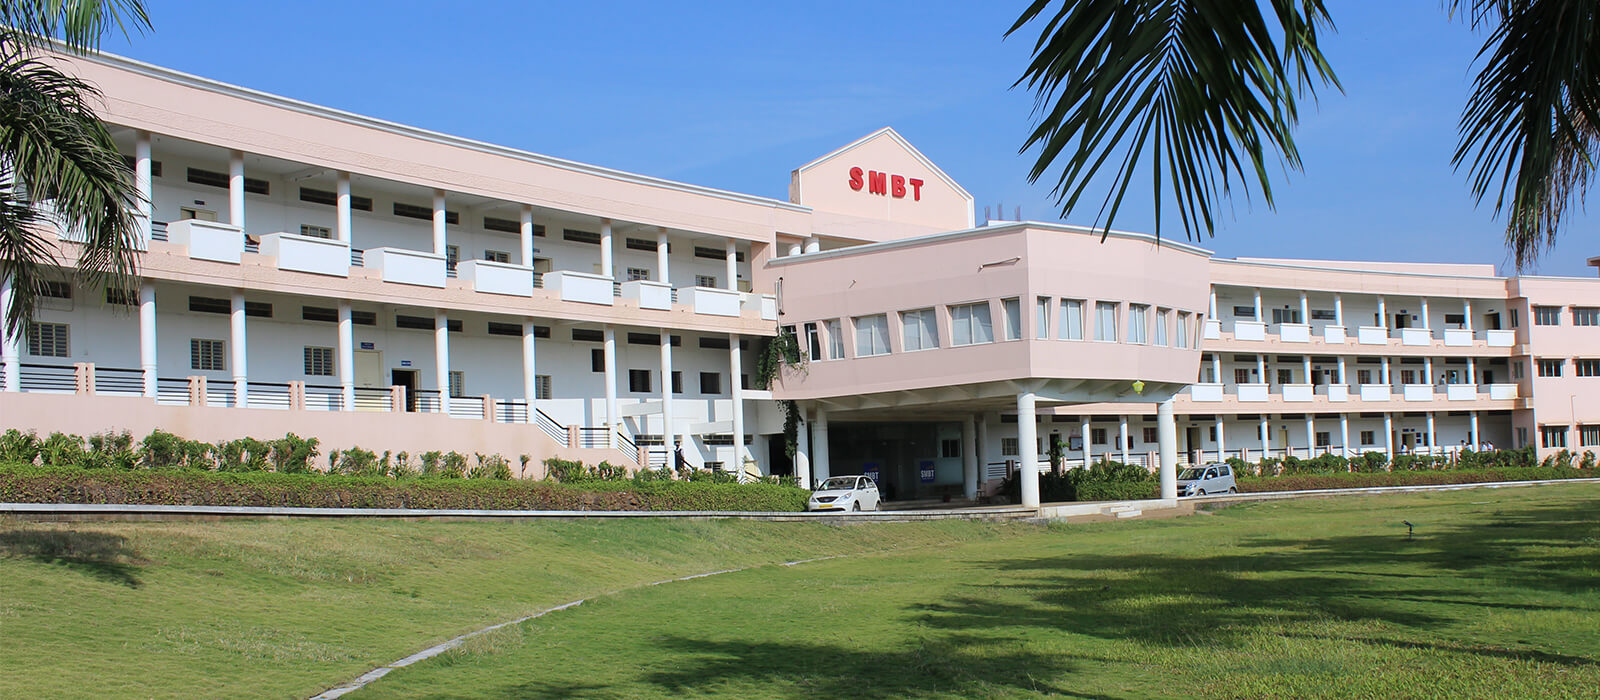 SMBT Institute of Medical Sciences & Research Centre, Nashik